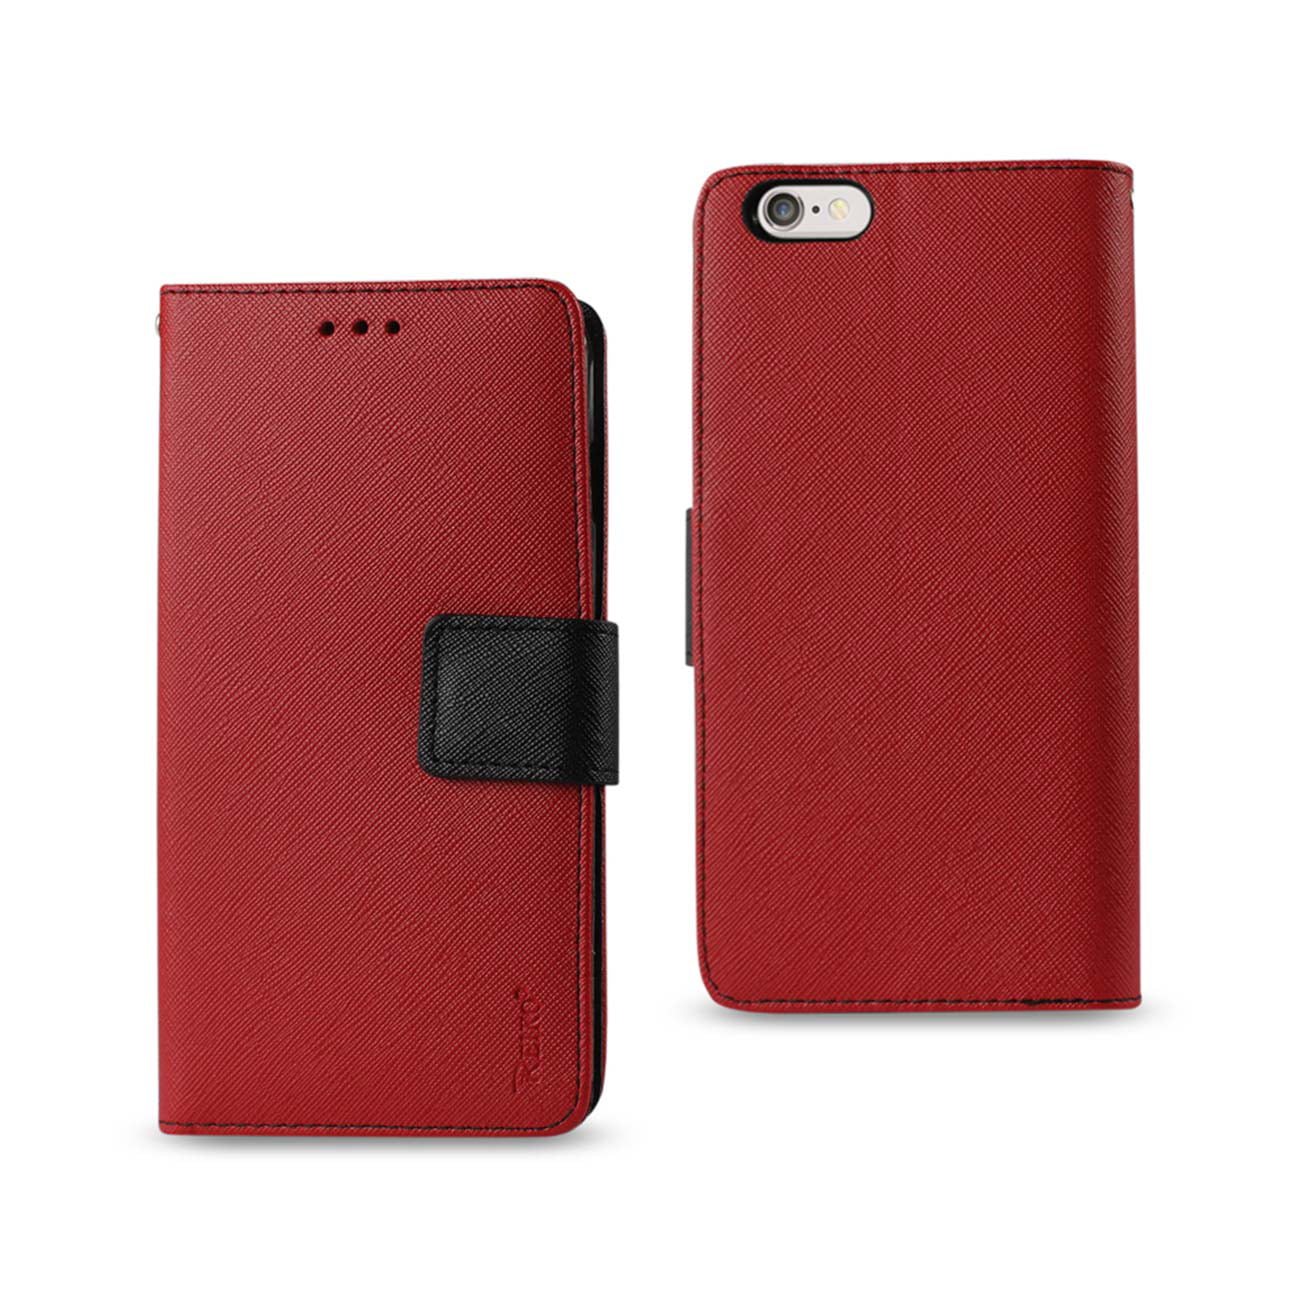 Iphone 6 Plus 3-in-1 Wallet Case In Red - Walmart.com